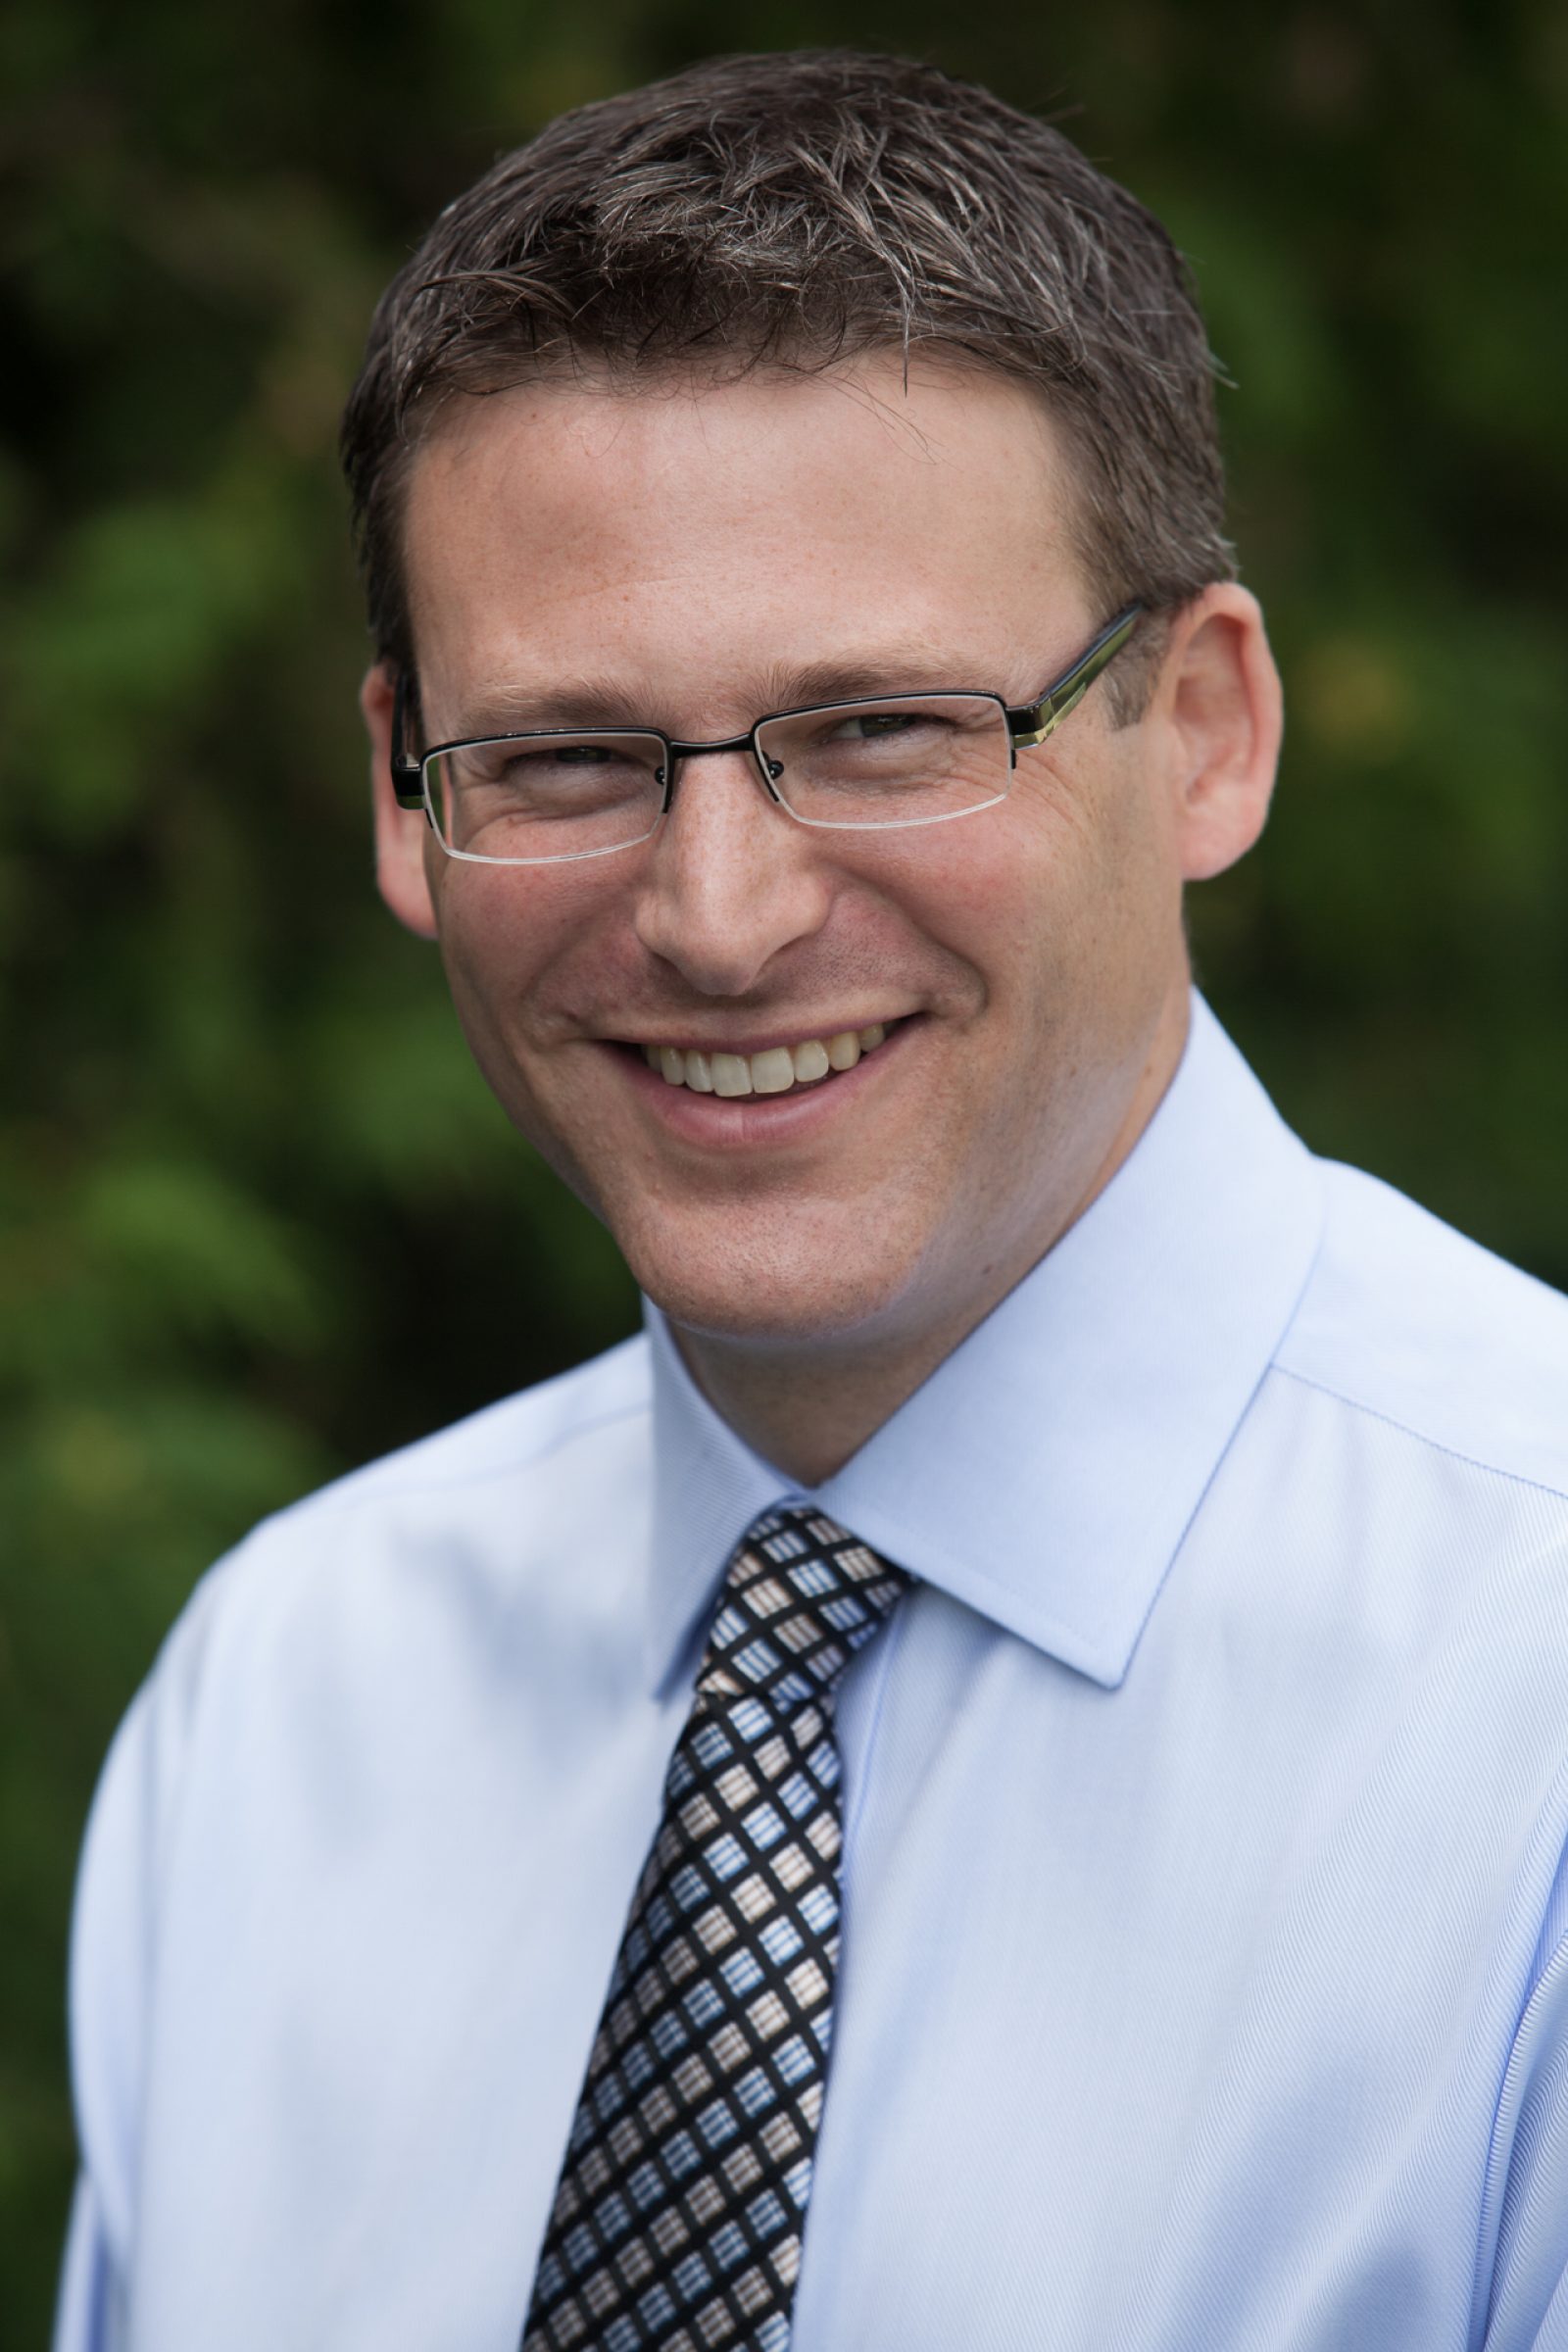 Roland Merbis, Director of Customer Insights & Analytics at Scotiabank